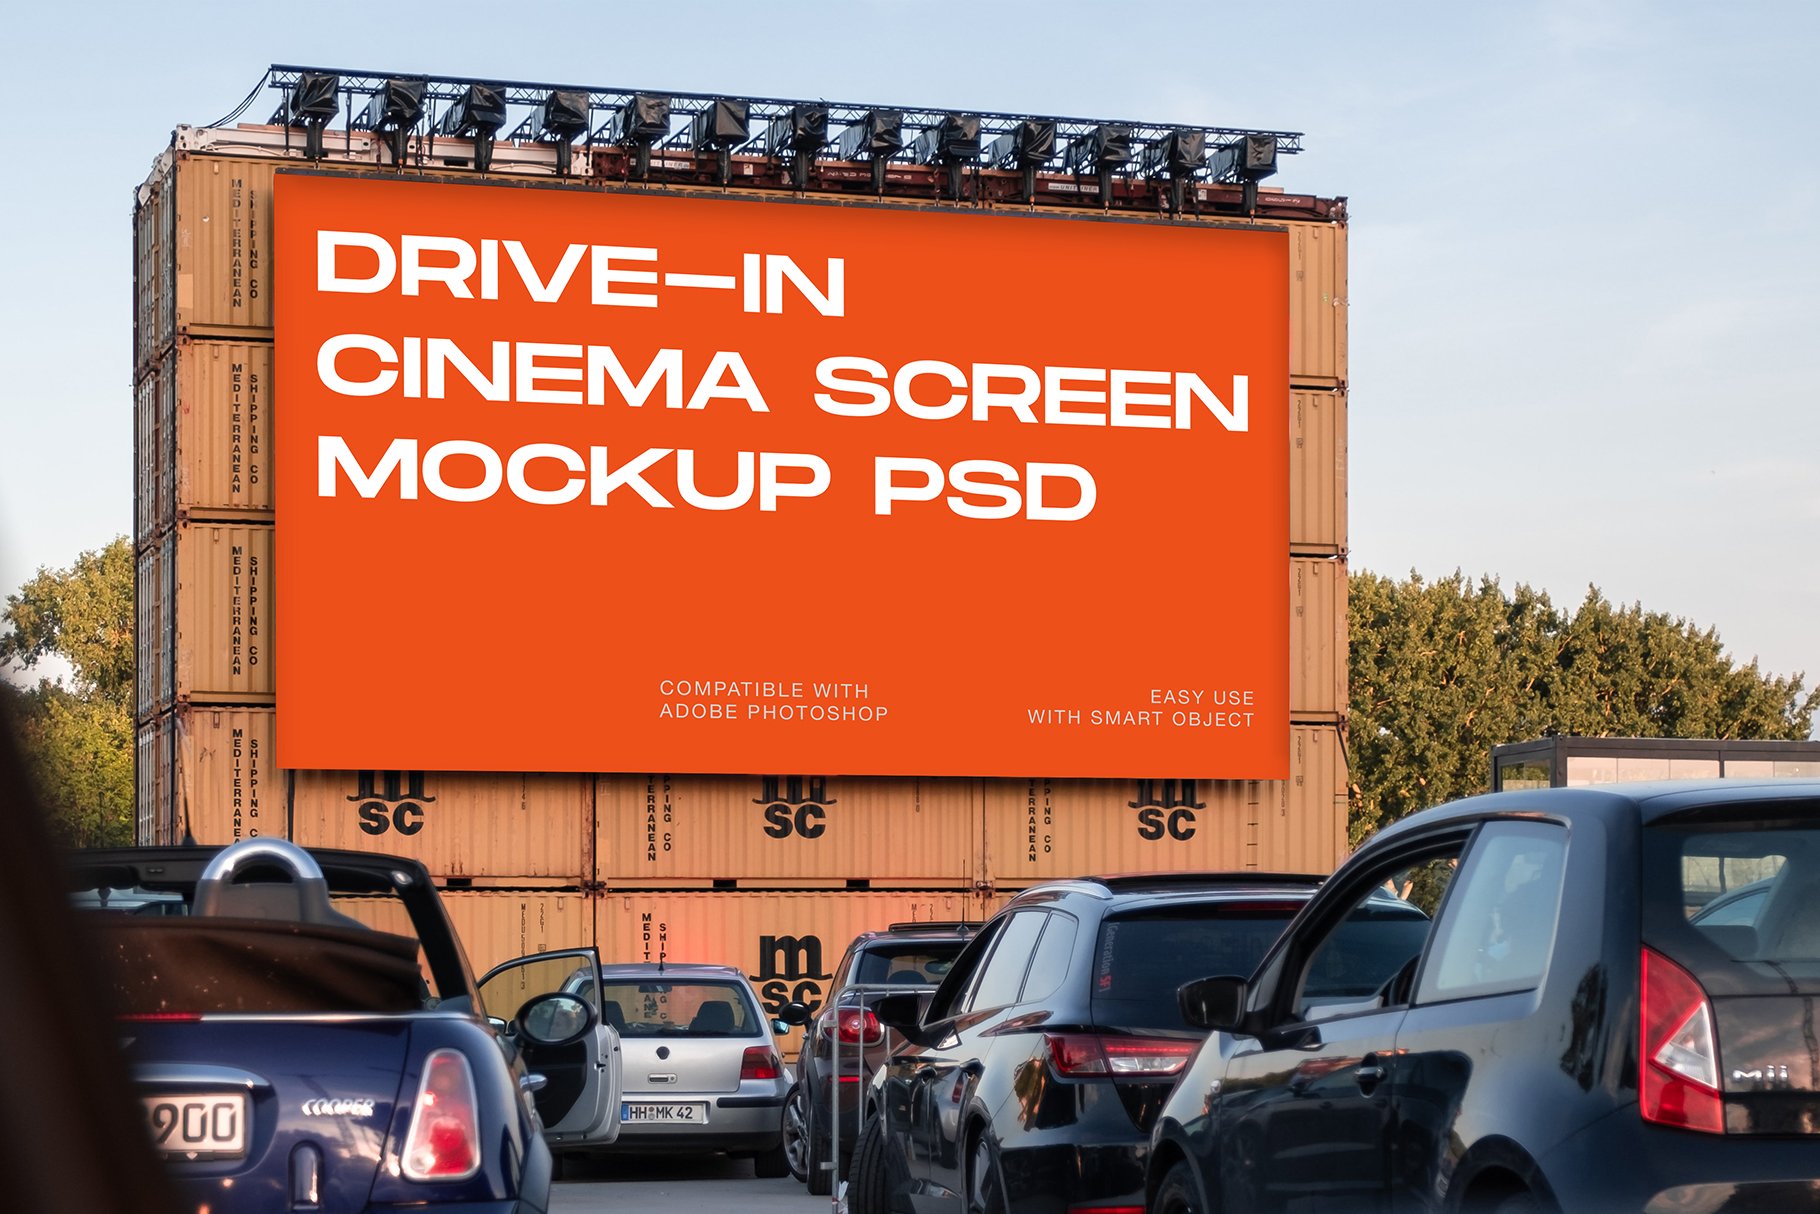 Drive-In Cinema Screen Mockup PSD cover image.